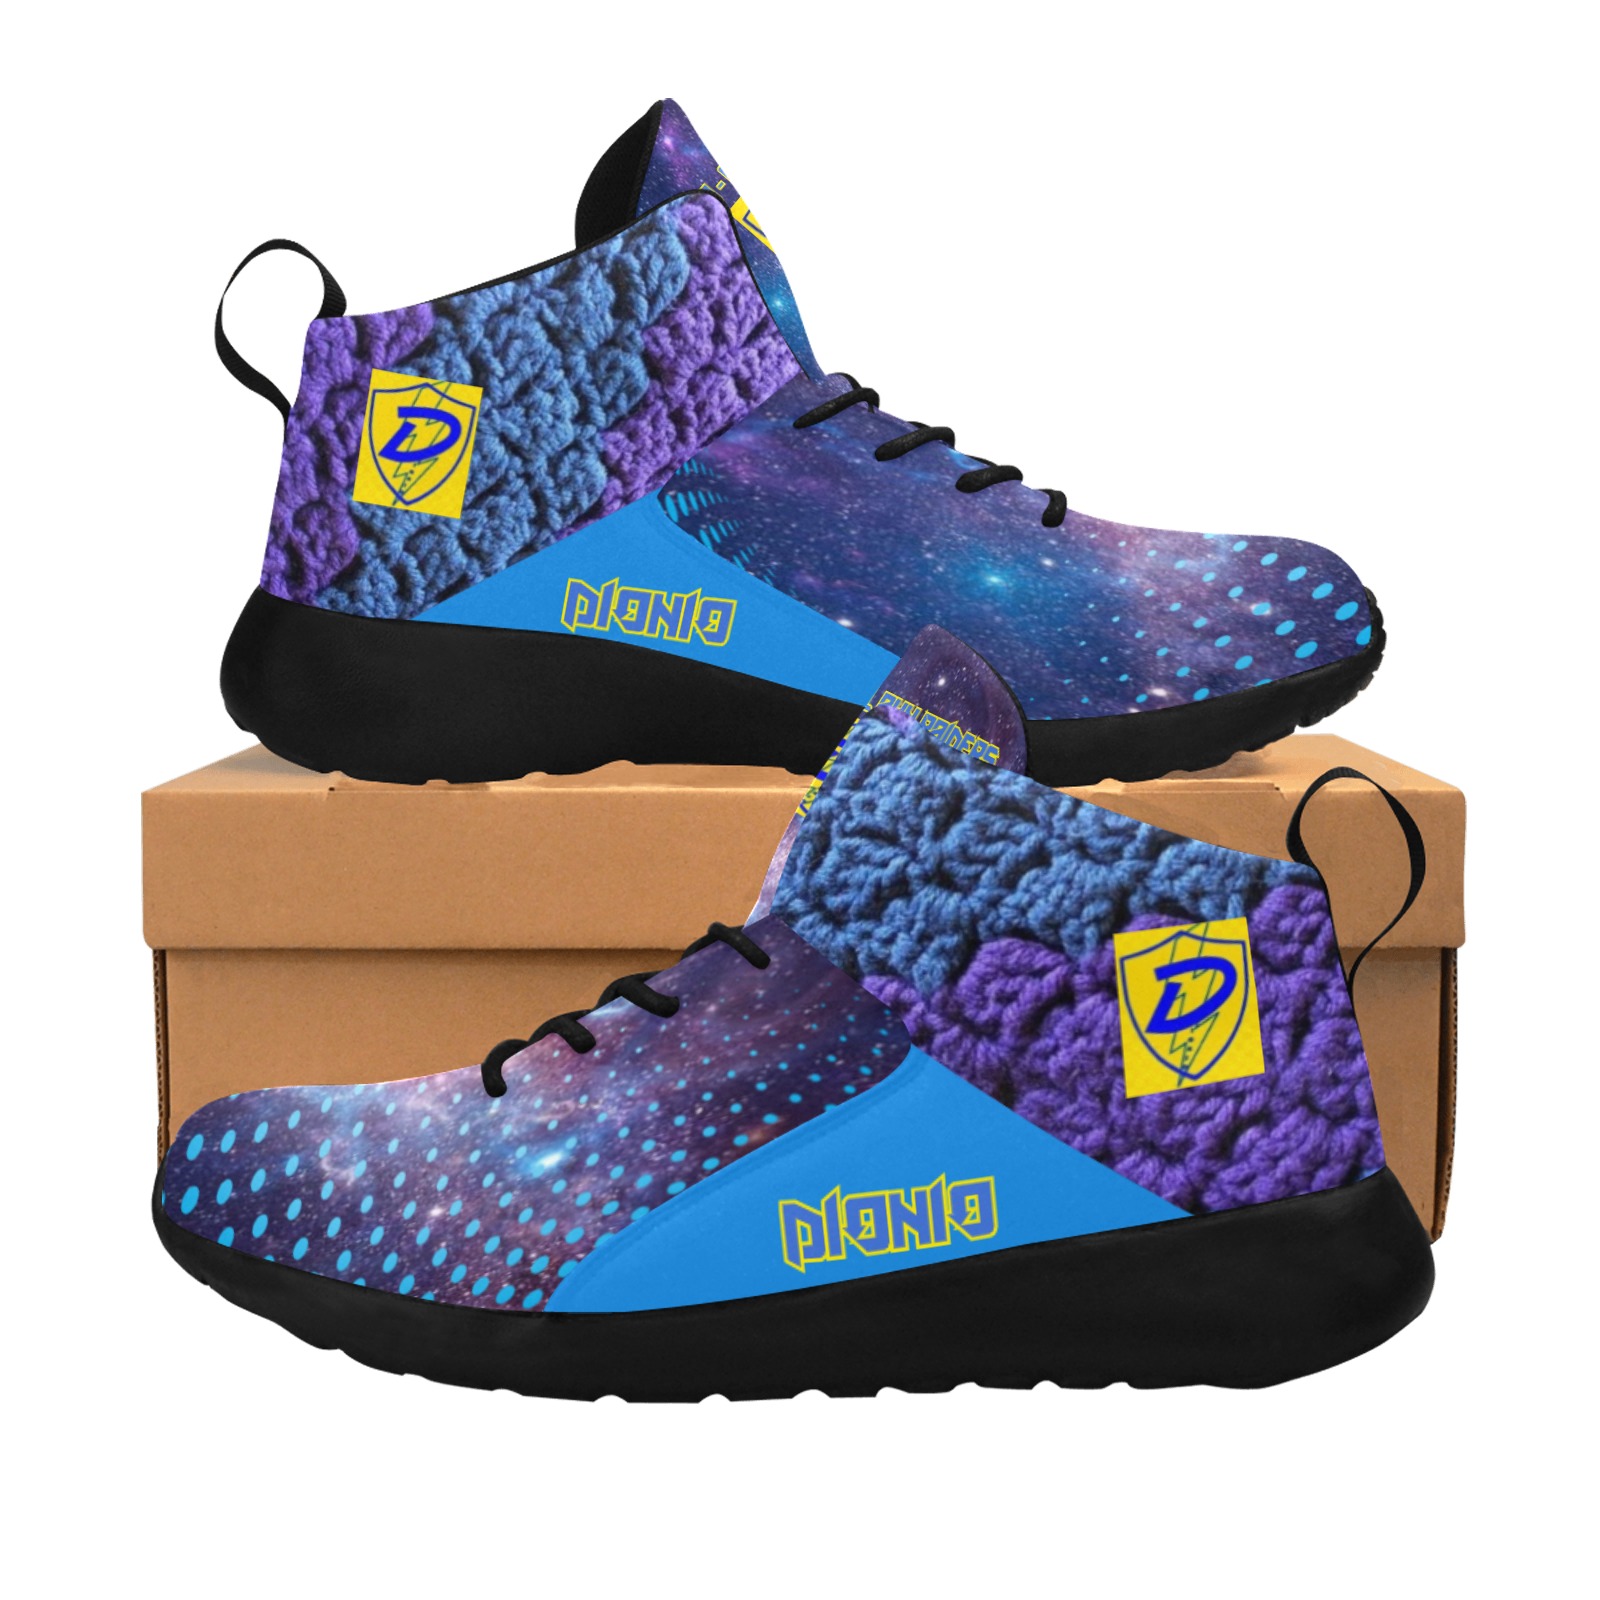 DIONIo - Galaxy Raiders Sneakers Men's Chukka Training Shoes (Model 57502)